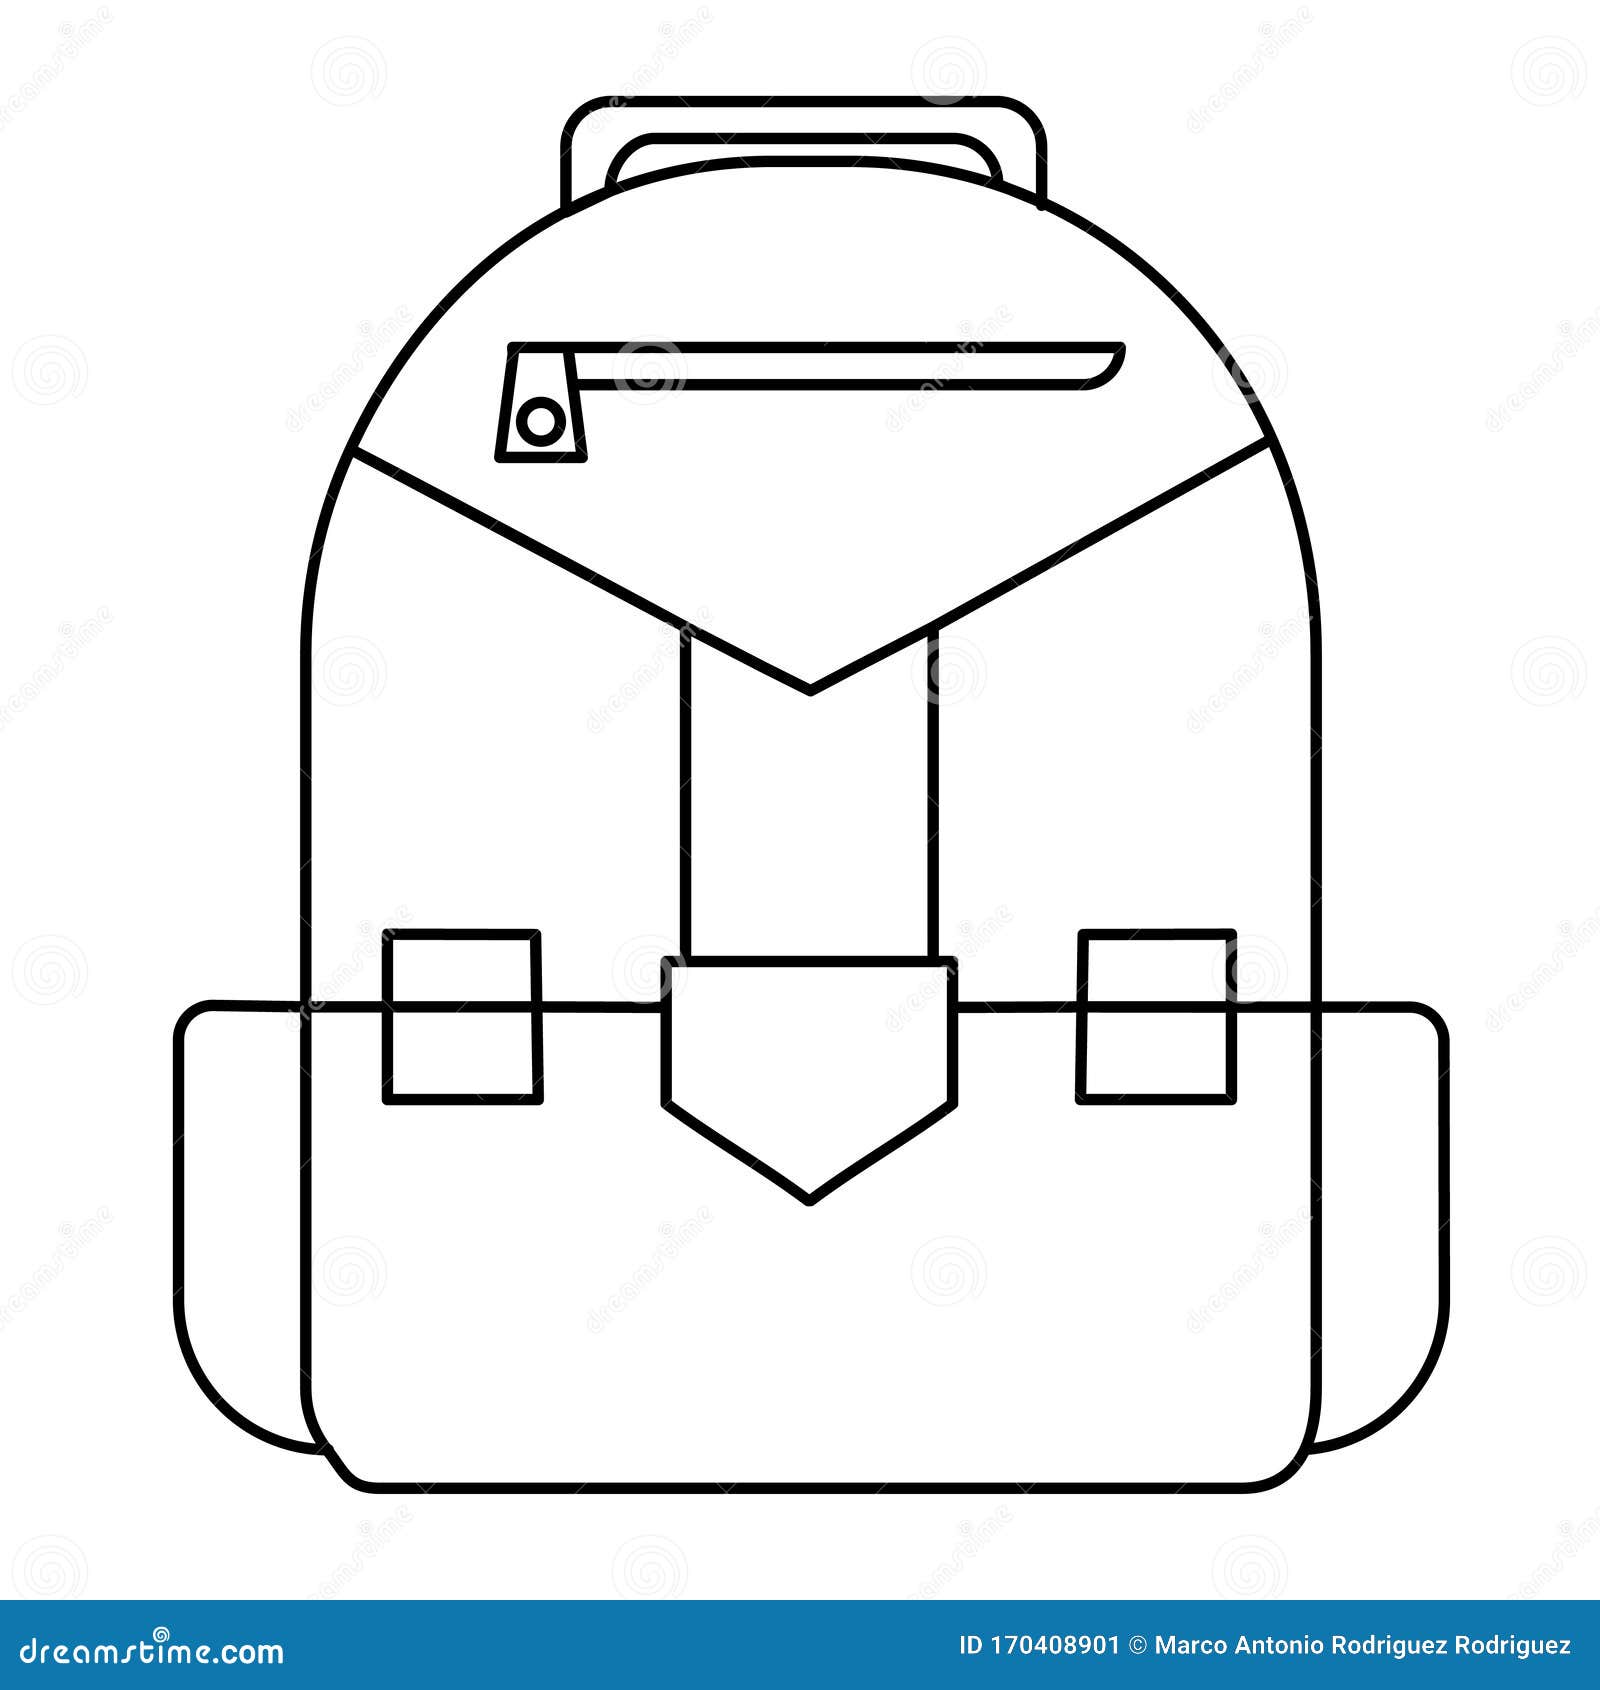 Cartoon School Backpack Isolated on White Background Stock Illustration ...